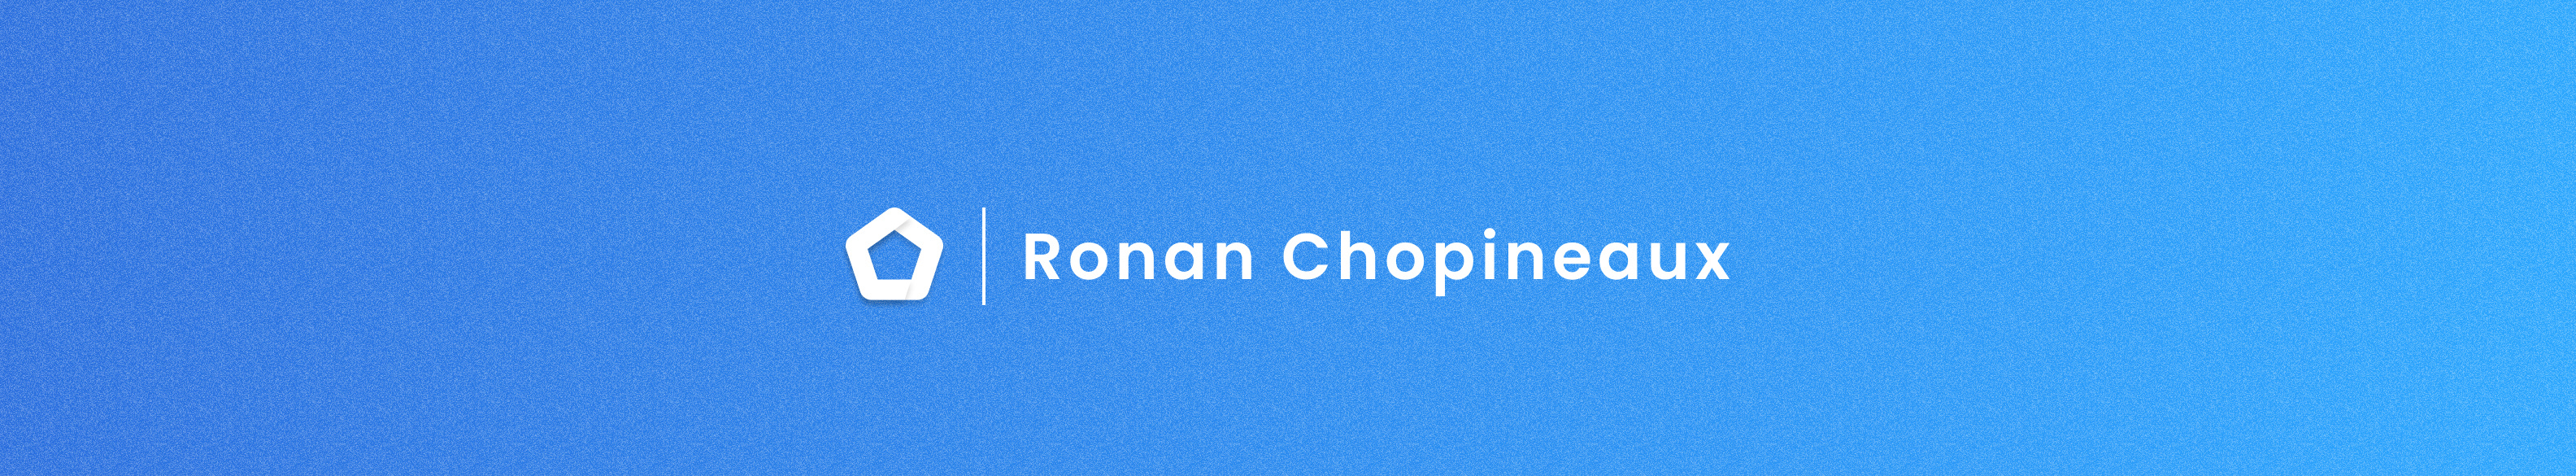 Ronan Chopineaux's profile banner